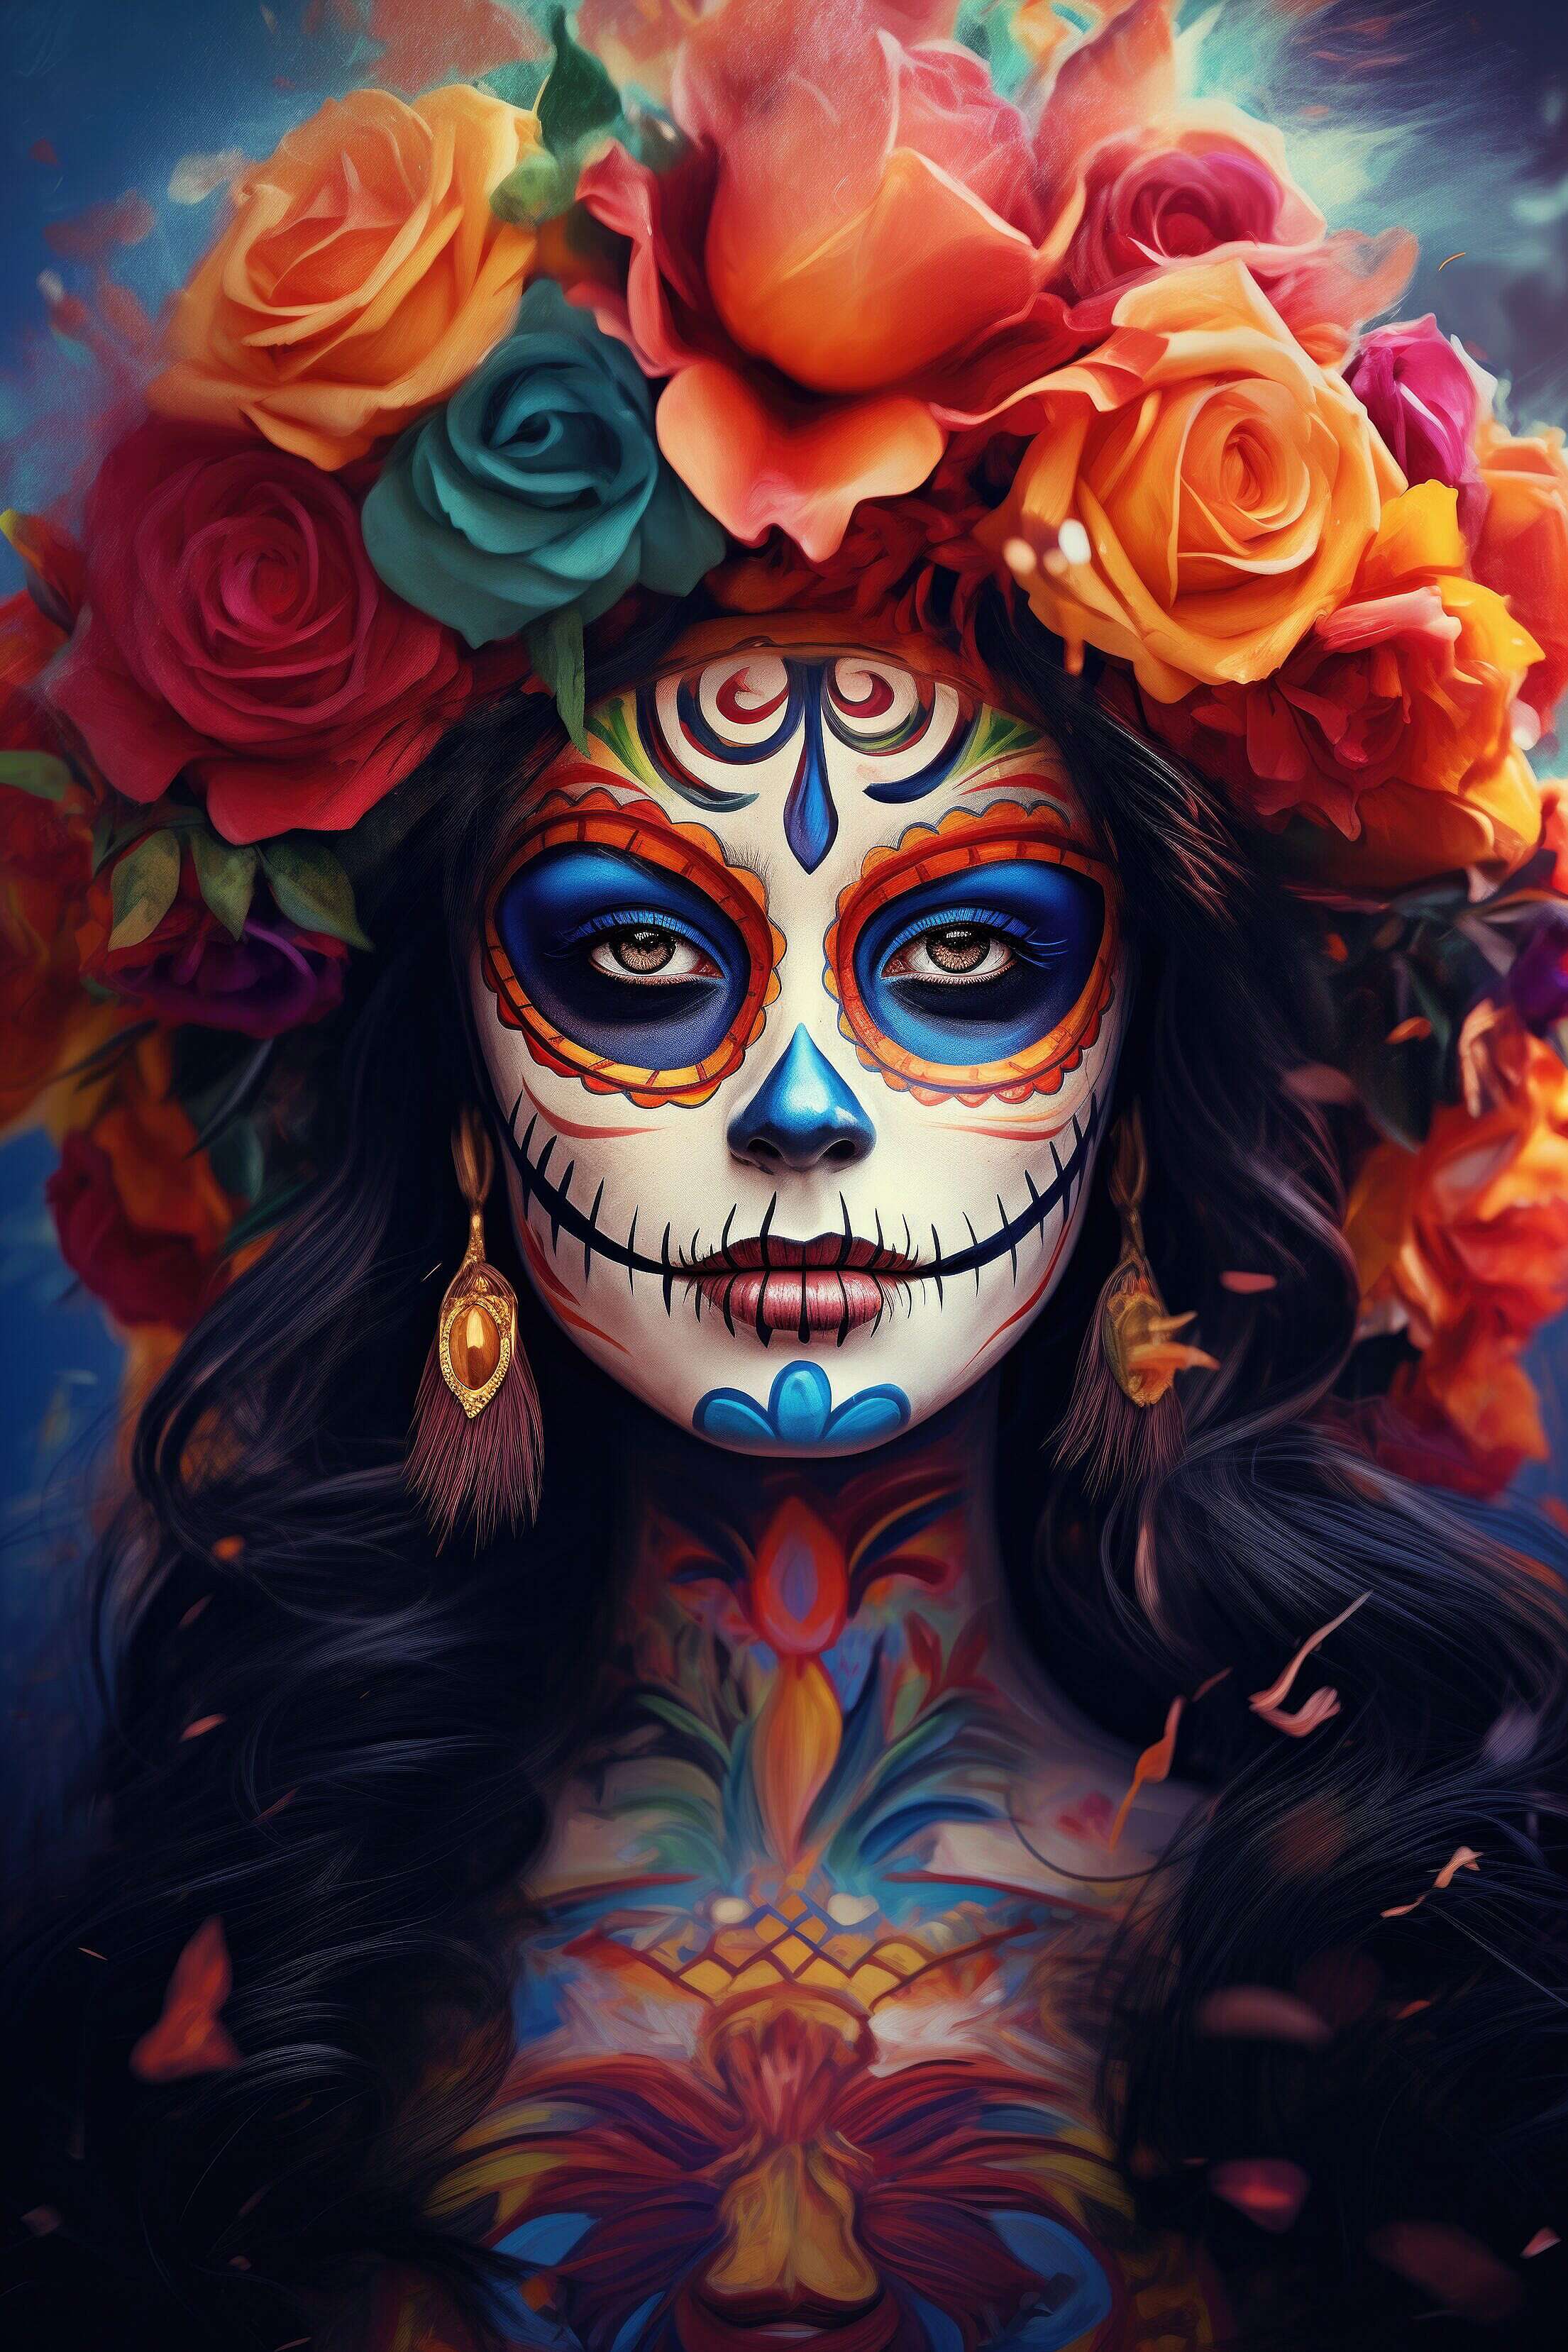 Colorful La Calavera Catrina Skull Makeup Free Stock Photo | picjumbo